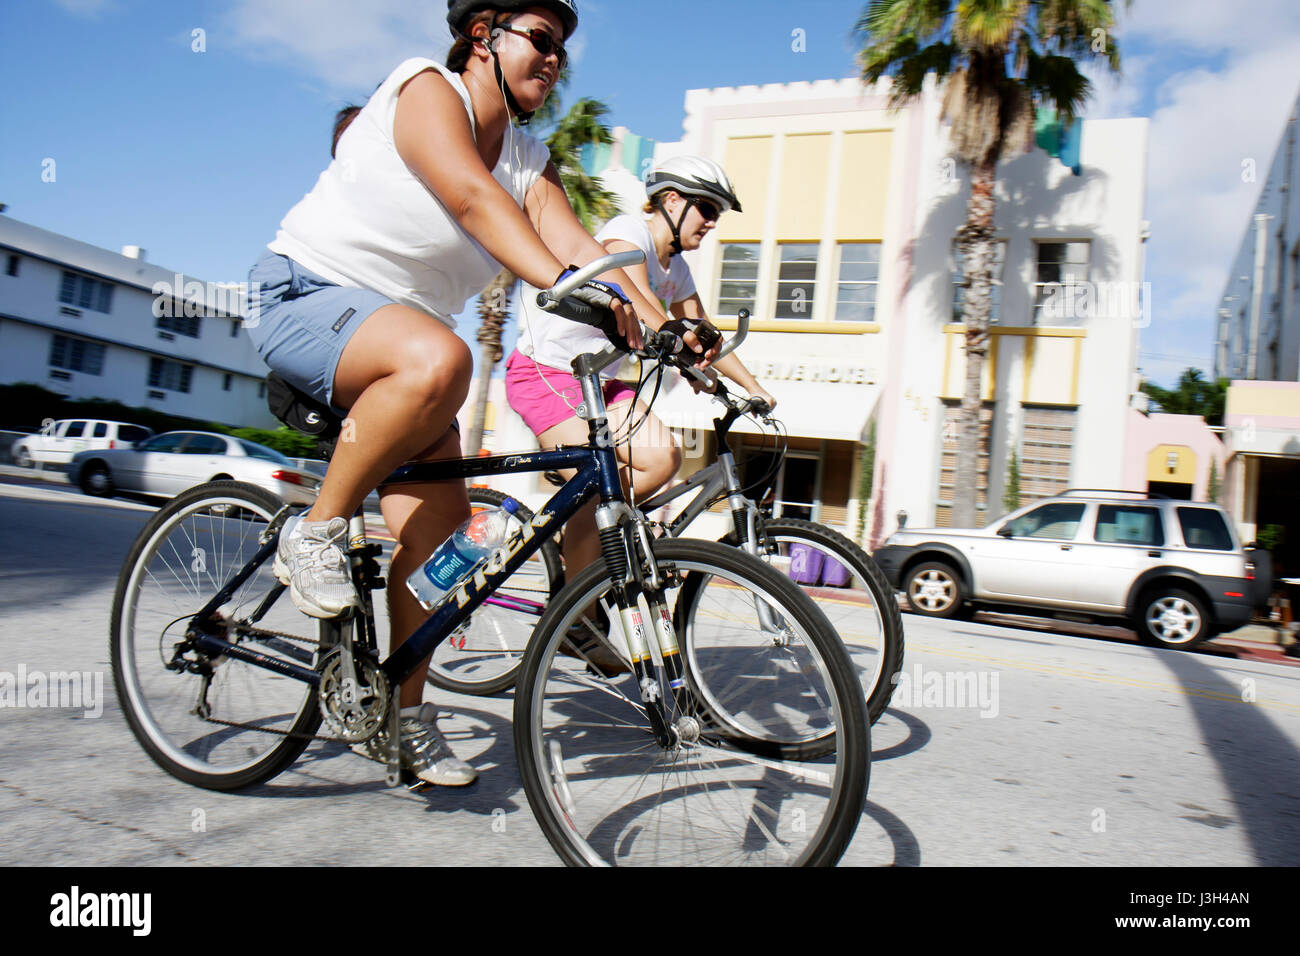 Miami Beach Florida, Ocean Drive, paseo en bicicleta comunitaria, casco, seguridad, deporte, fitness, negros africanos minoría étnica, adultos mujeres mujeres Foto de stock